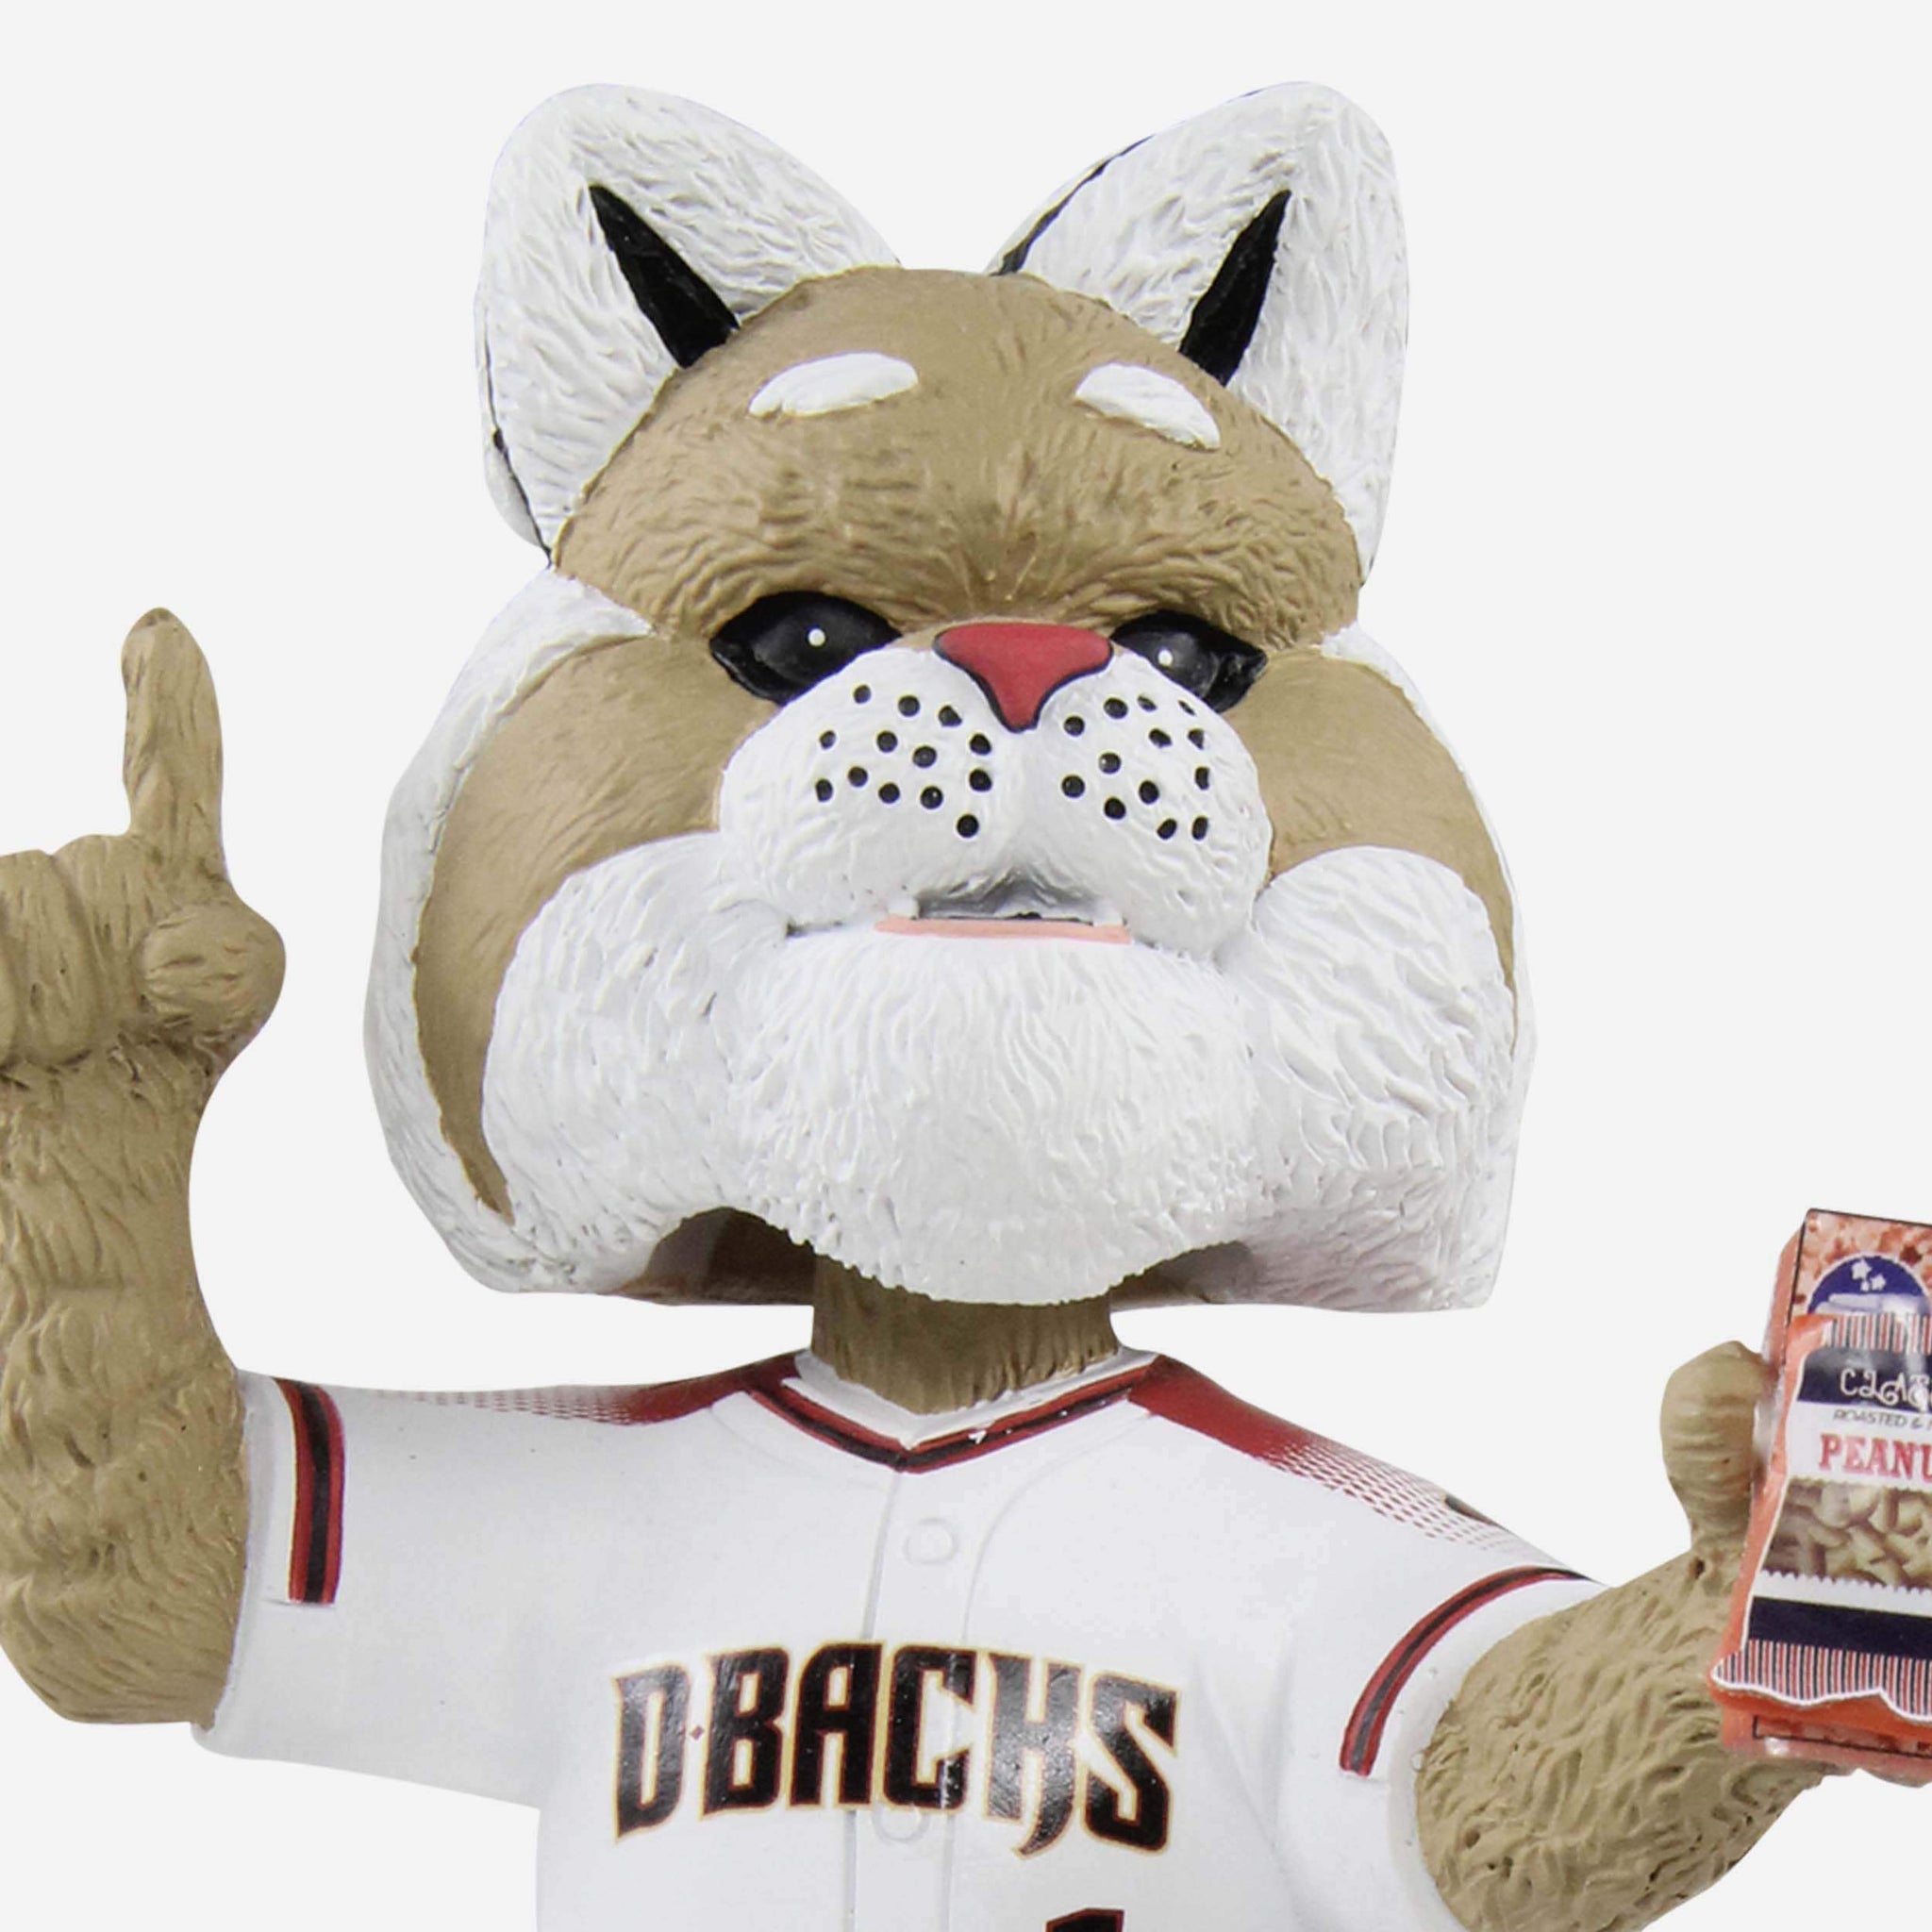 Arizona Diamondbacks Mascot Baxter the Bobcat – The Emblem Source